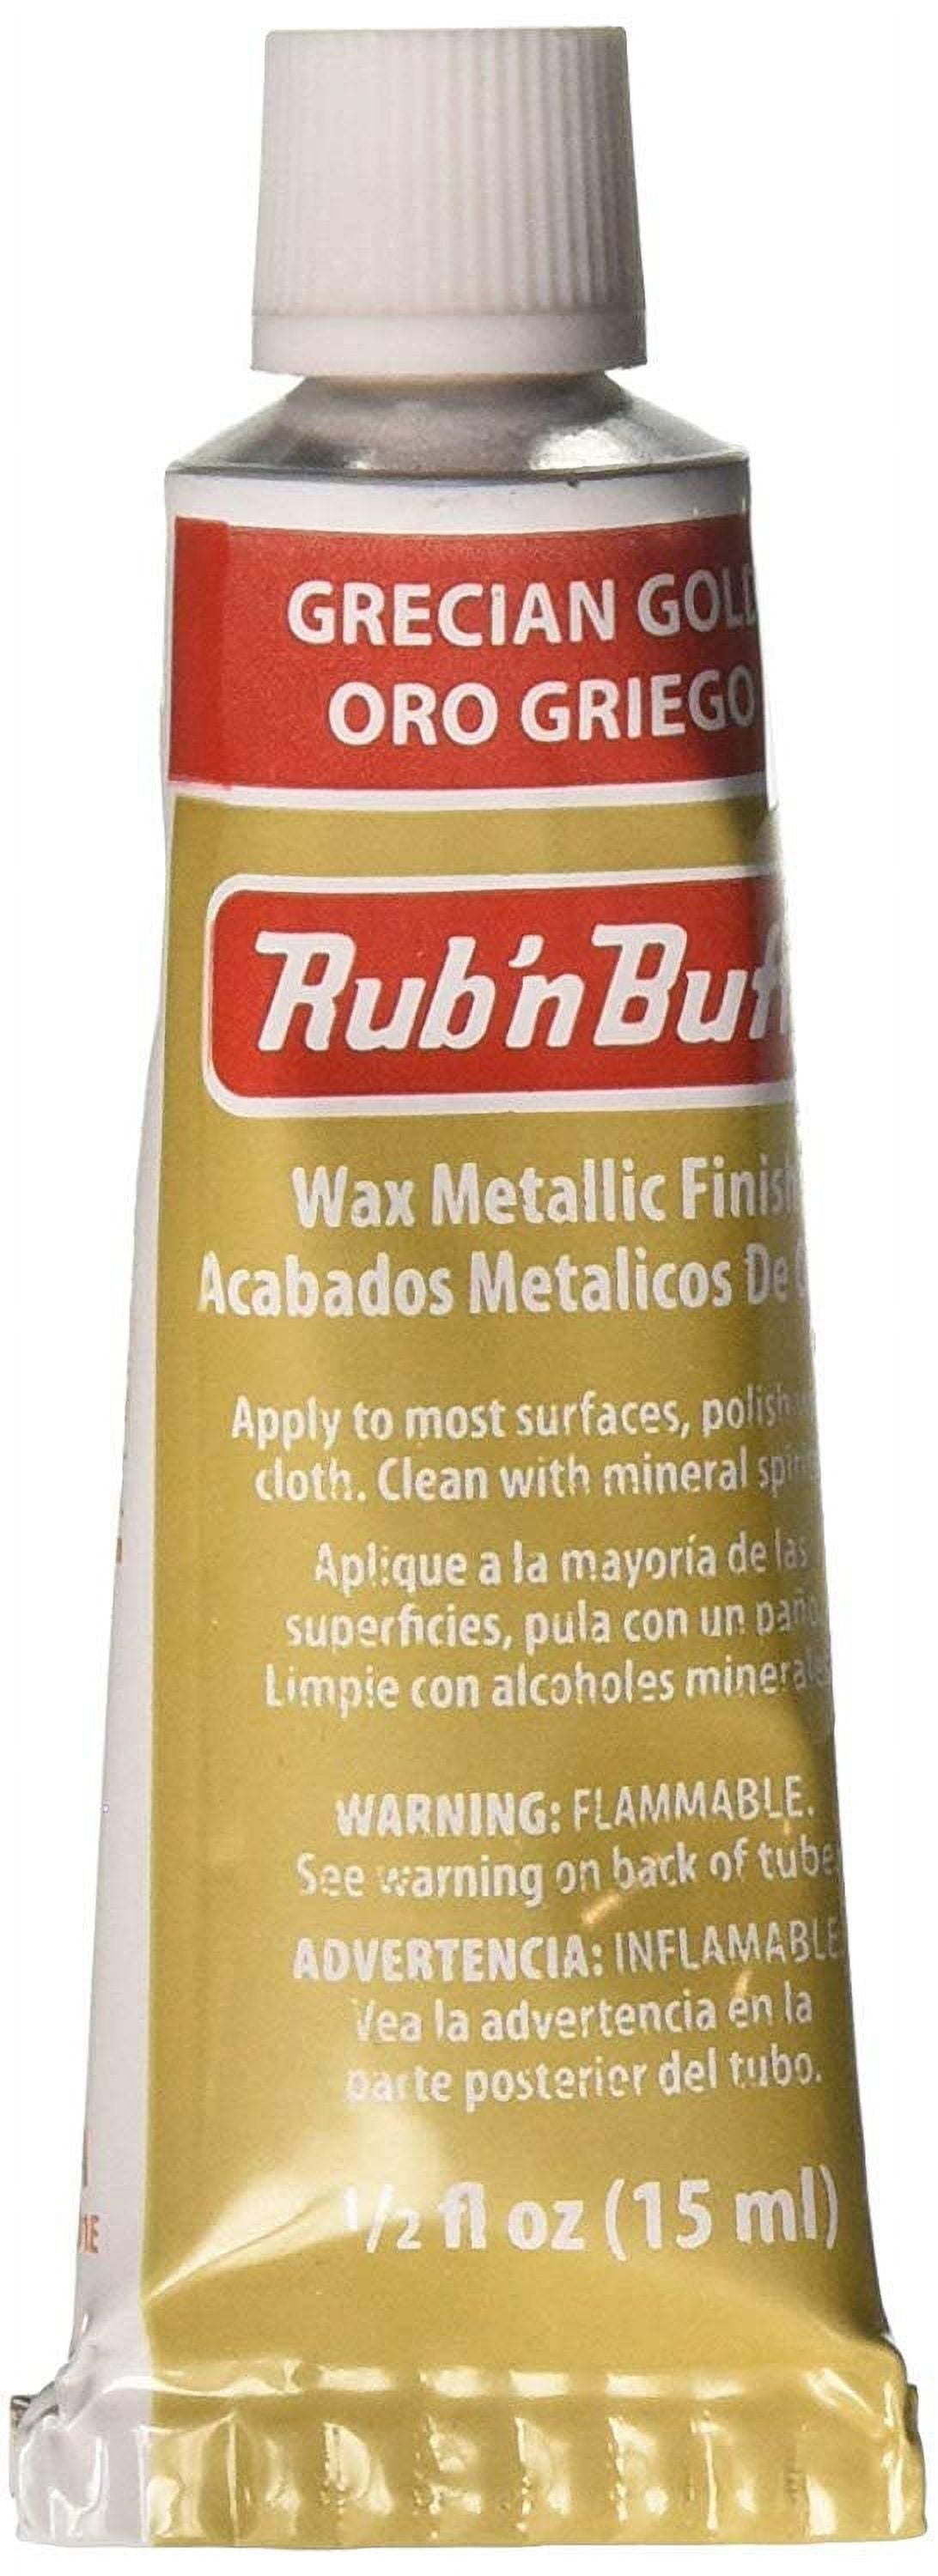 Amaco Rub 'n Buff Wax Metallic Finish, European Gold, 0.5-Fluid Ounce, 3 Pack, Adult Unisex